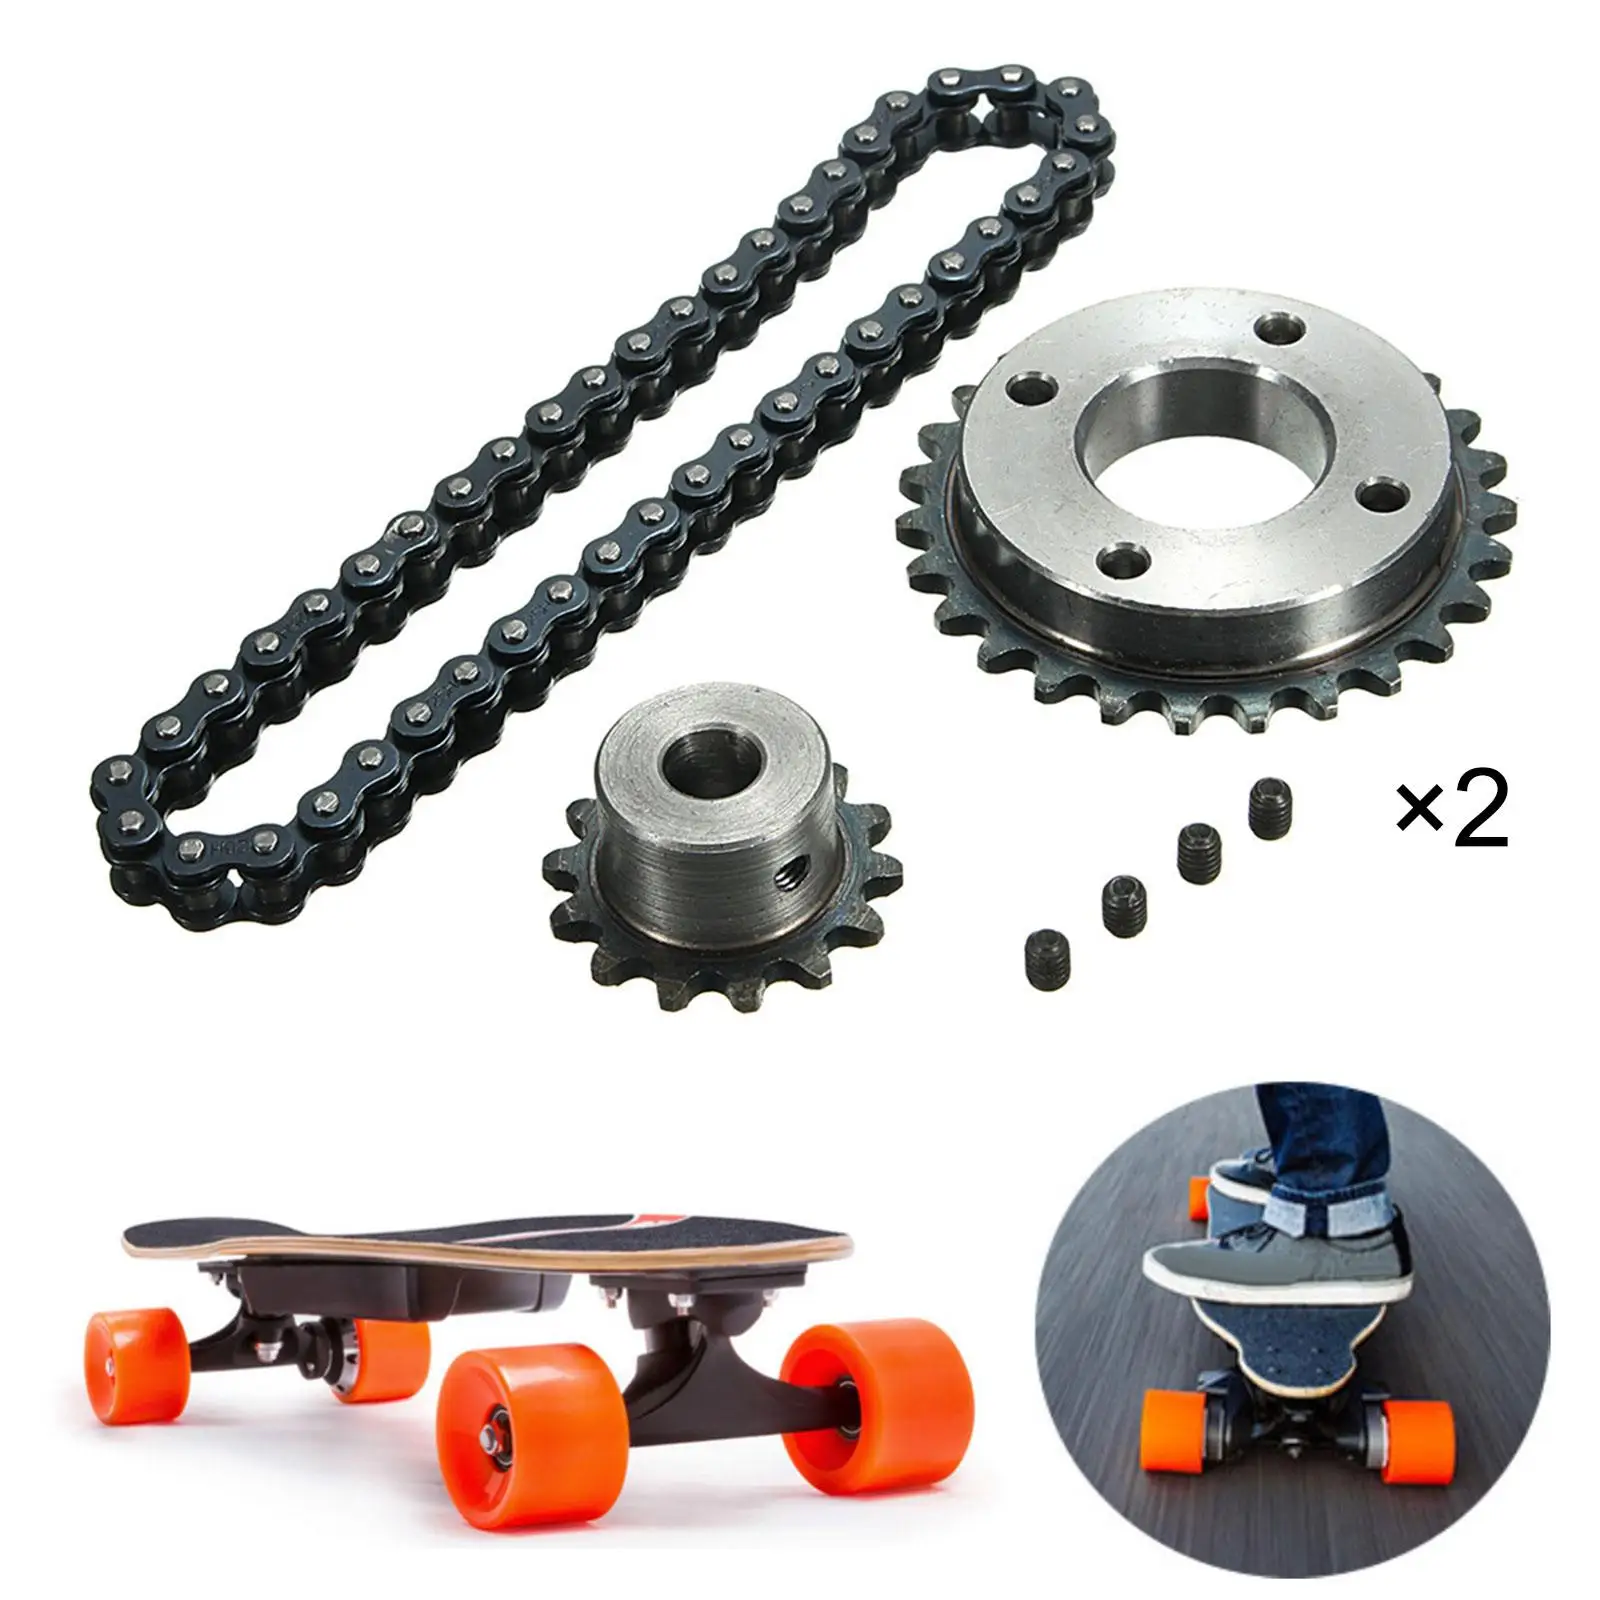 Mini Sprocket Chain Wheel Accessories DIY Motor Electric Skateboard Gear